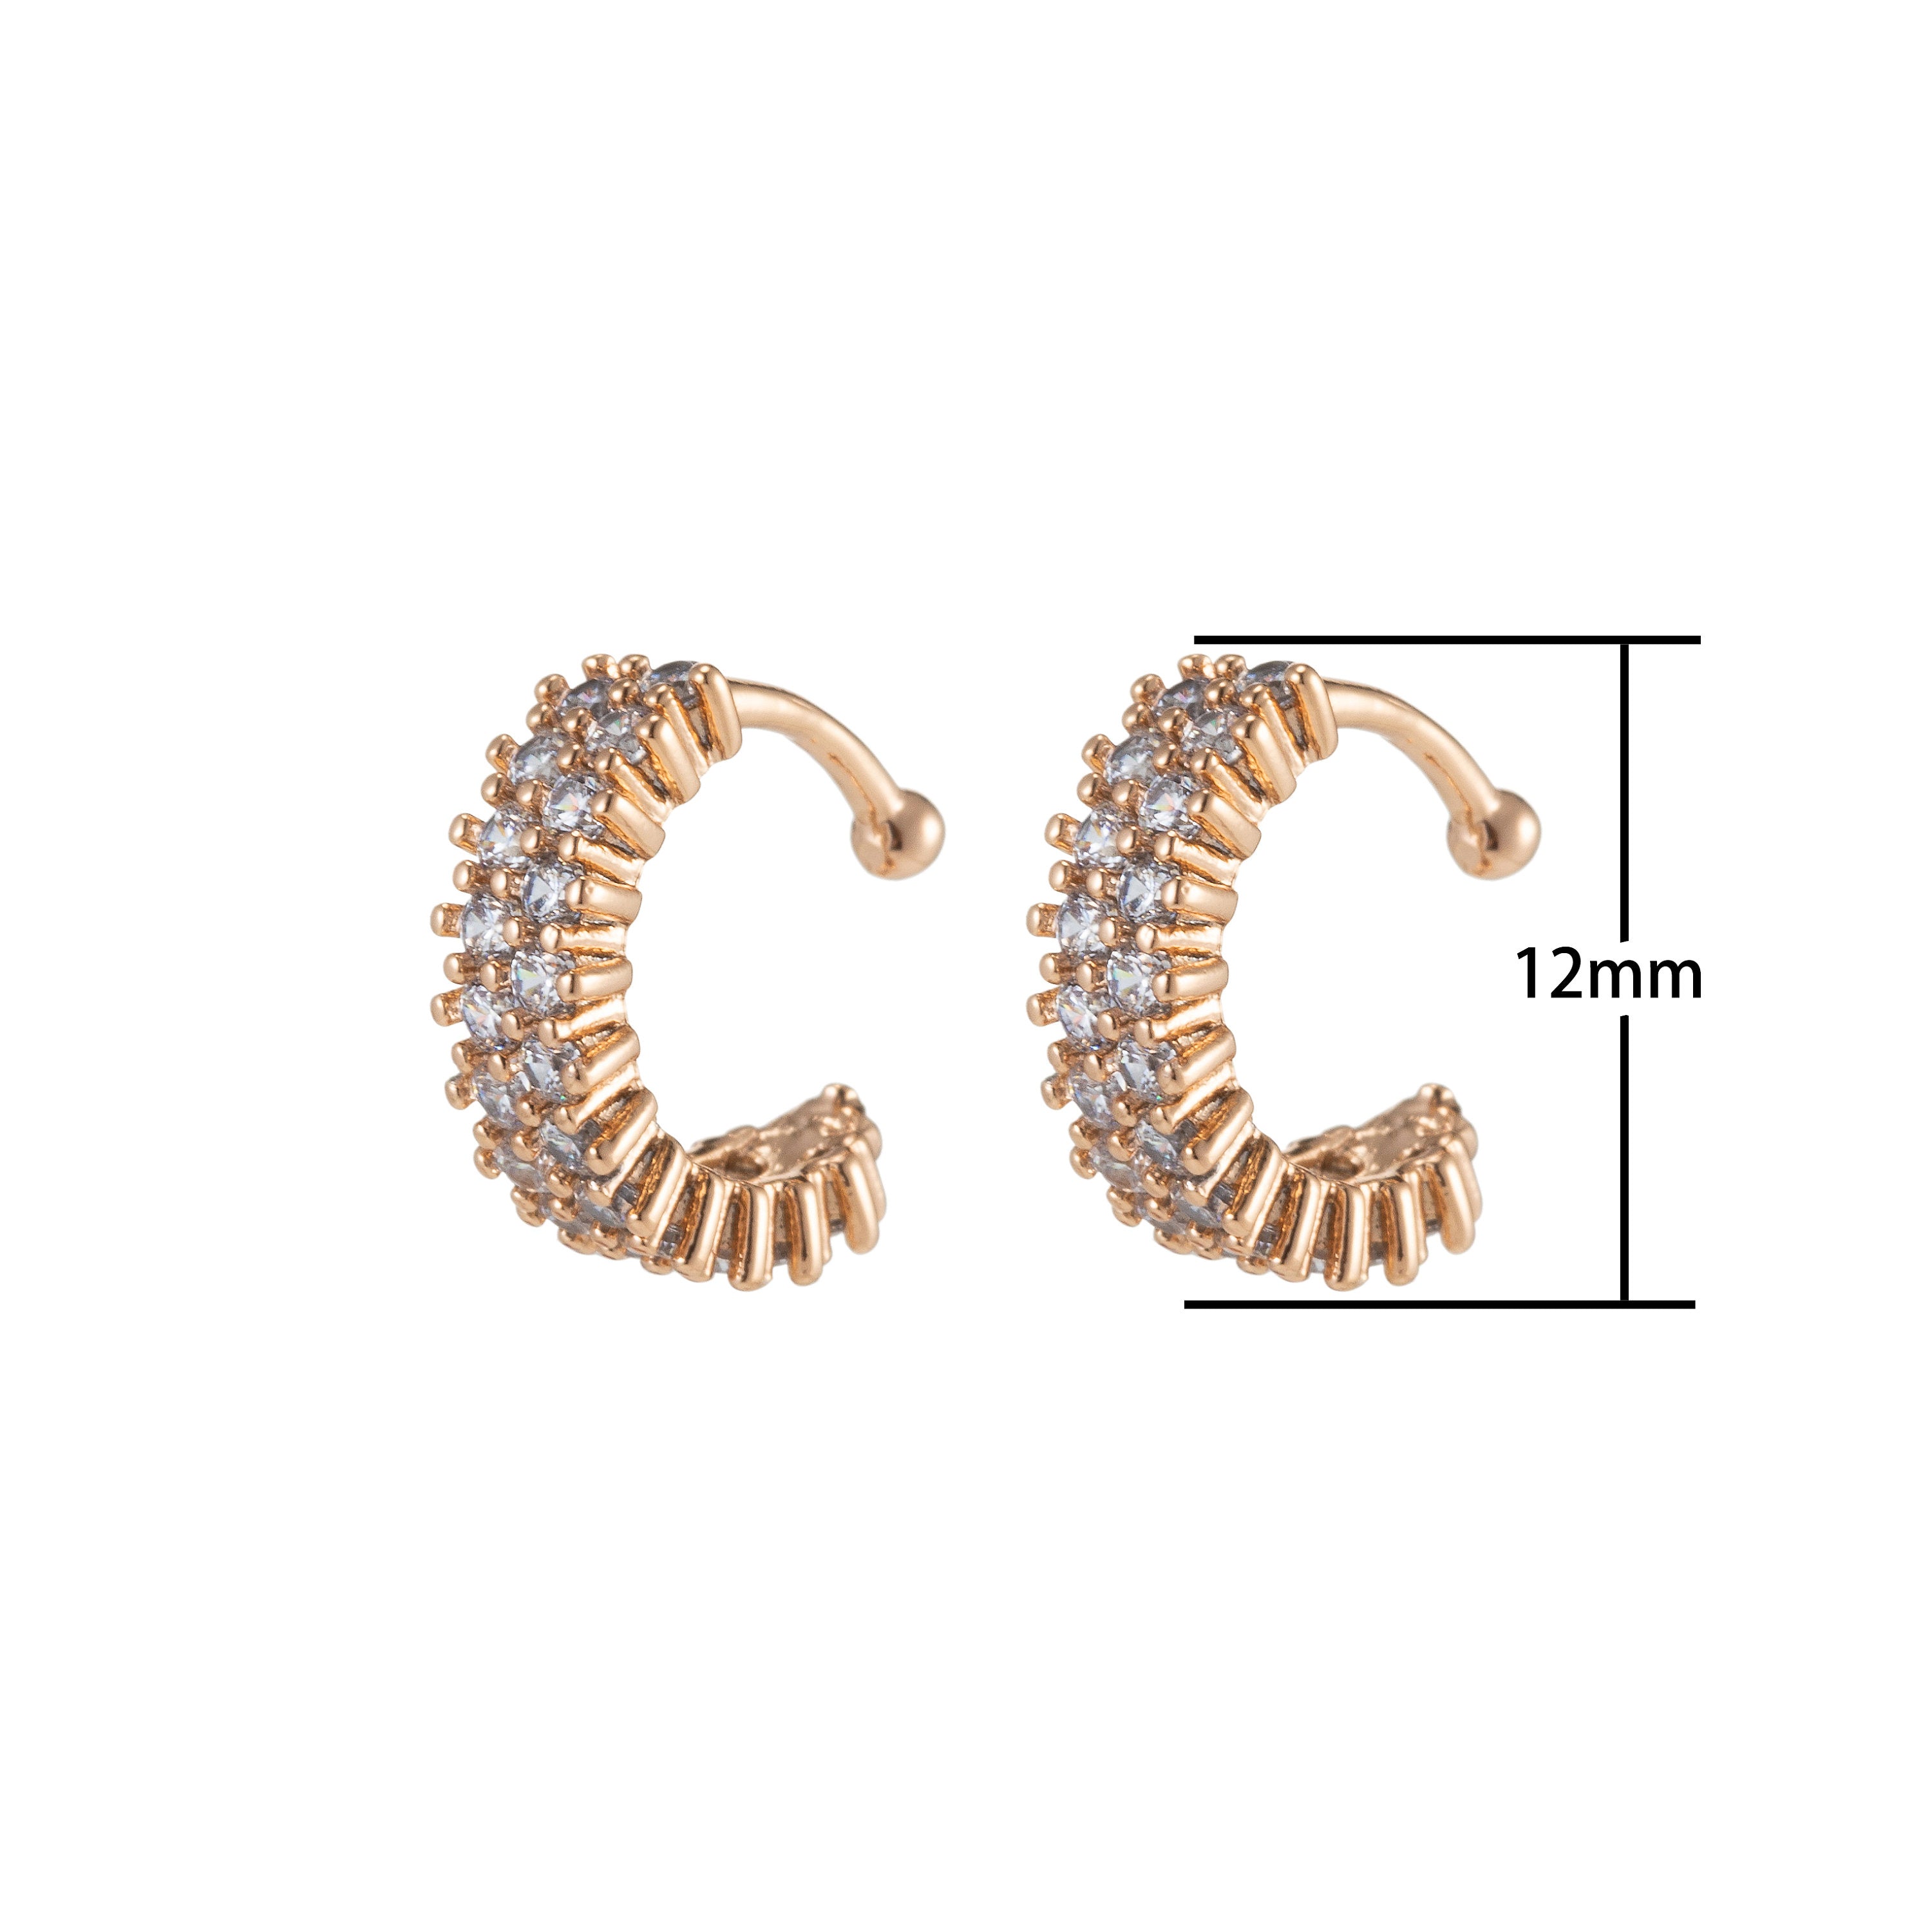 Chunky cz bezel - cuff earring - cuff - ear cuff - gold cuff - silver - conch - no piercing - cuffs - helix - cartilage - earring, EARCUFF-016 - DLUXCA